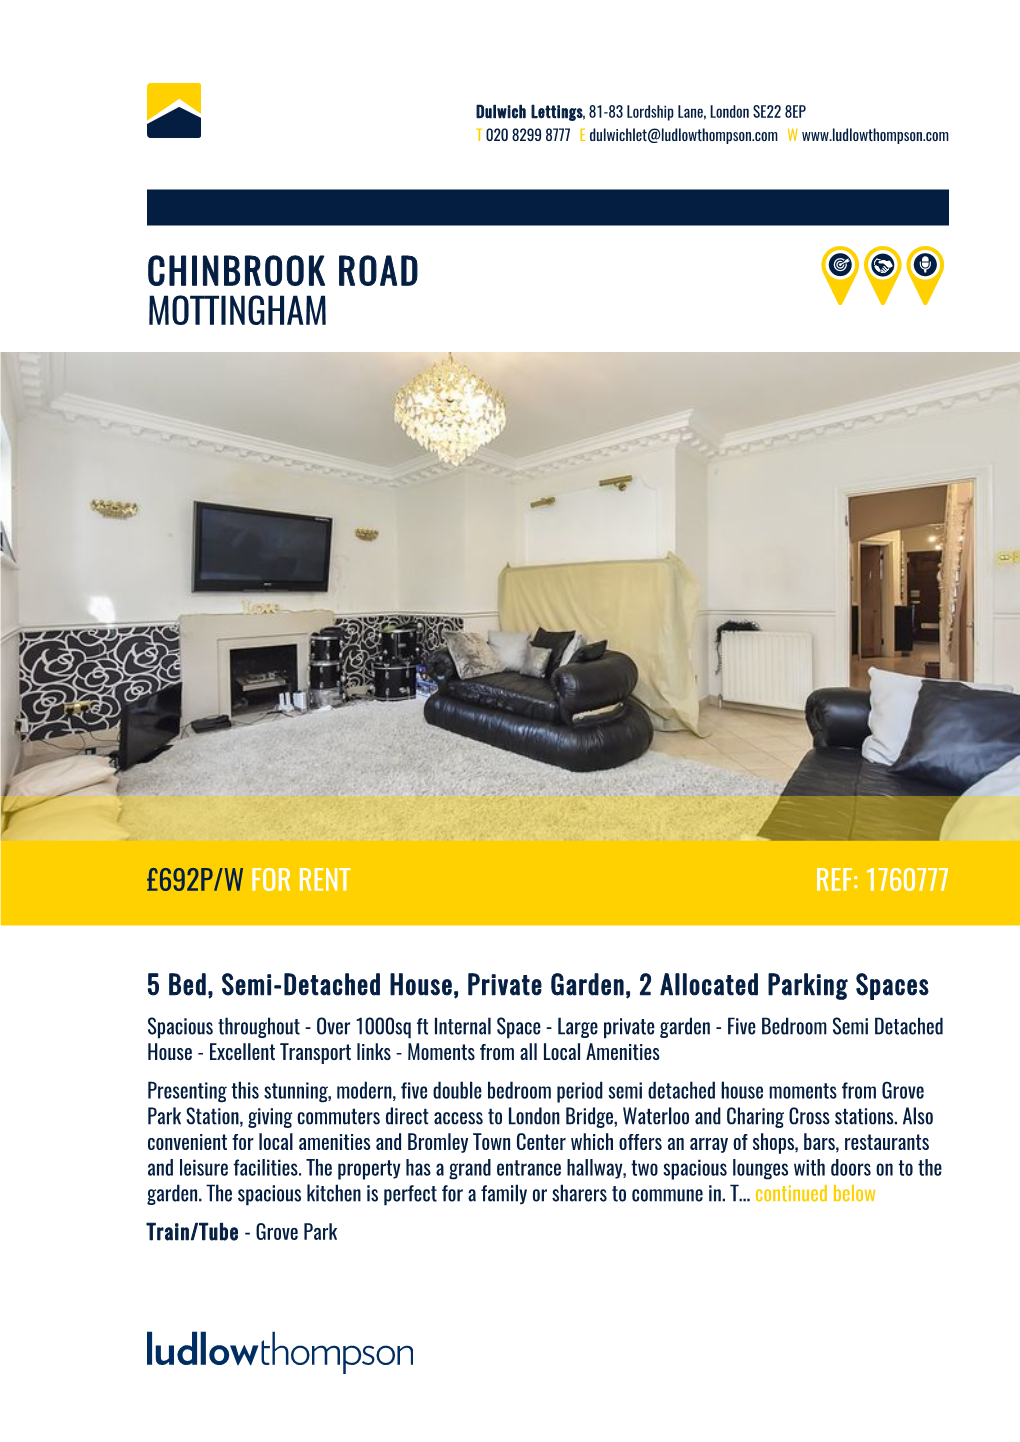 Chinbrook Road Mottingham